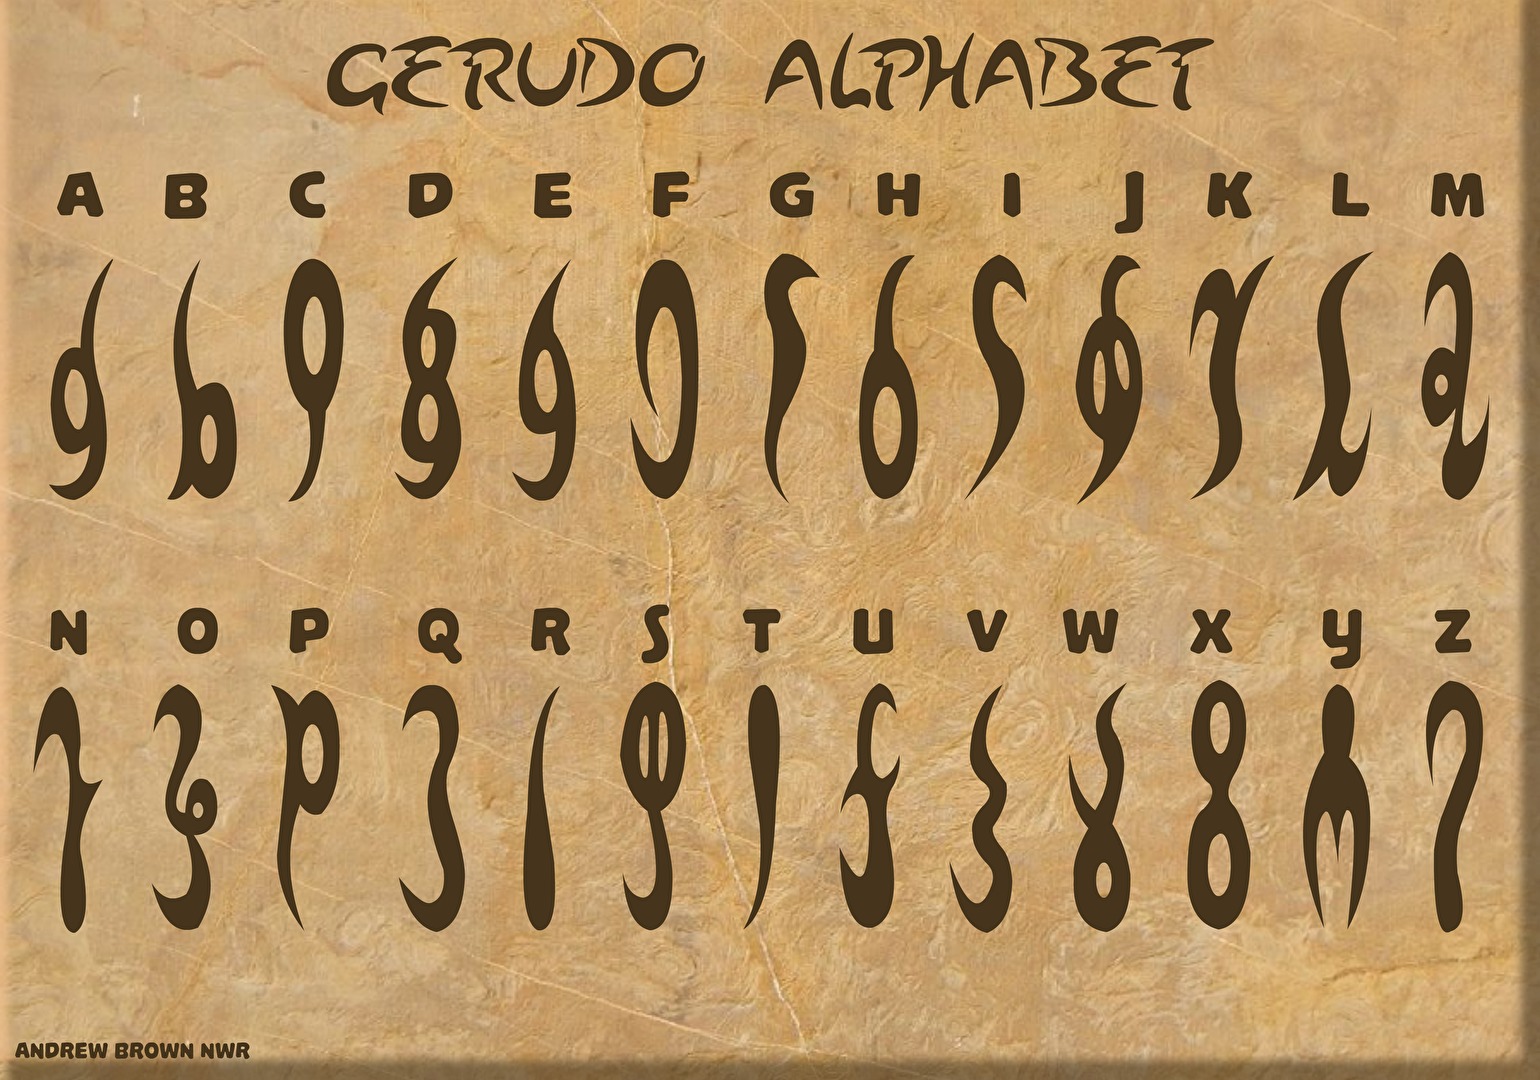 Language of the Gerudo | Zeldapedia | FANDOM powered by Wikia